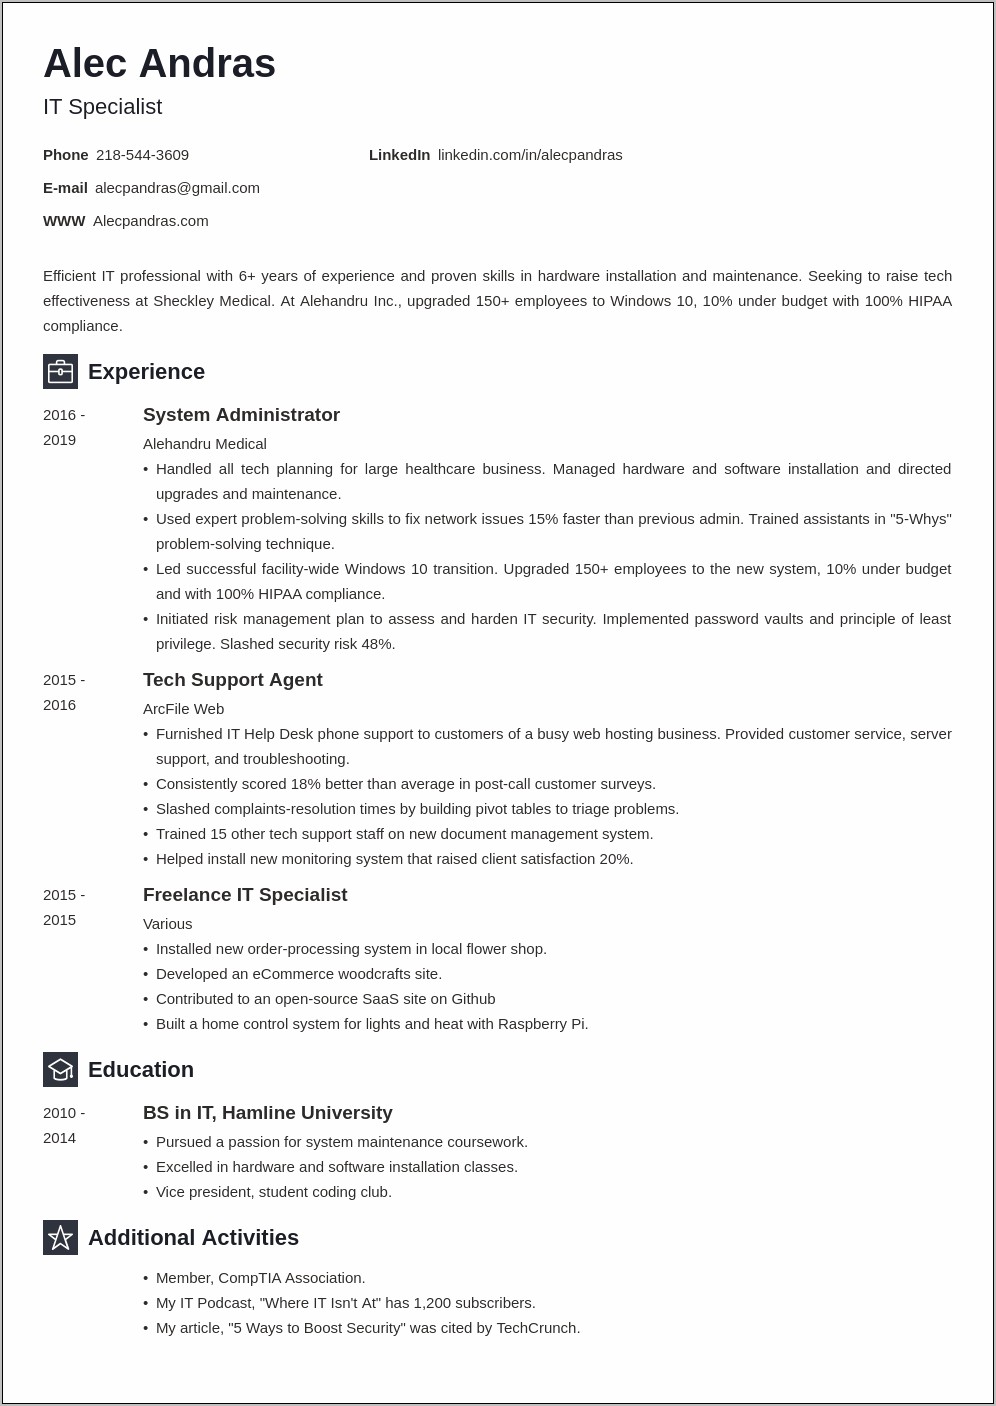 Resume Sample Entry Level Computer Technician